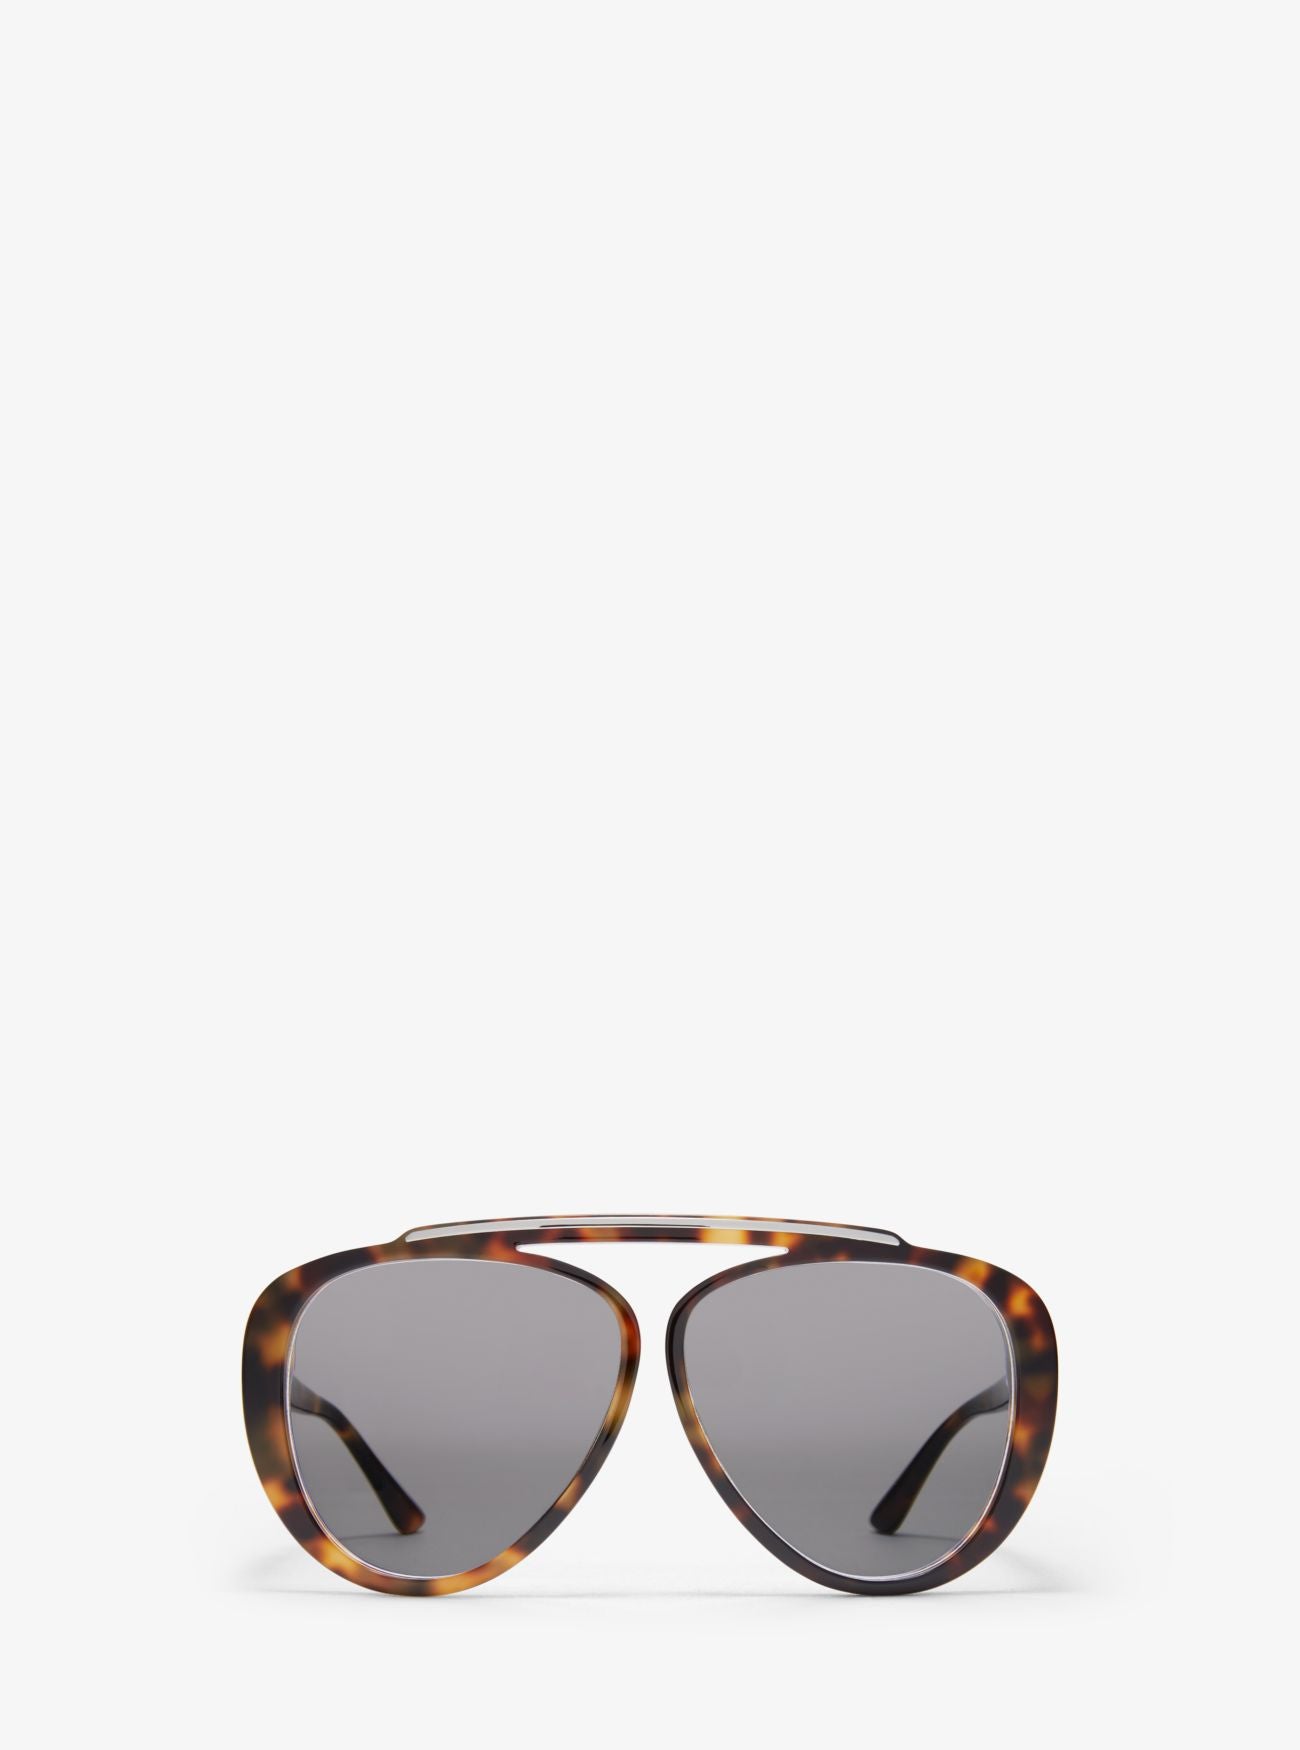 mk sunglasses price